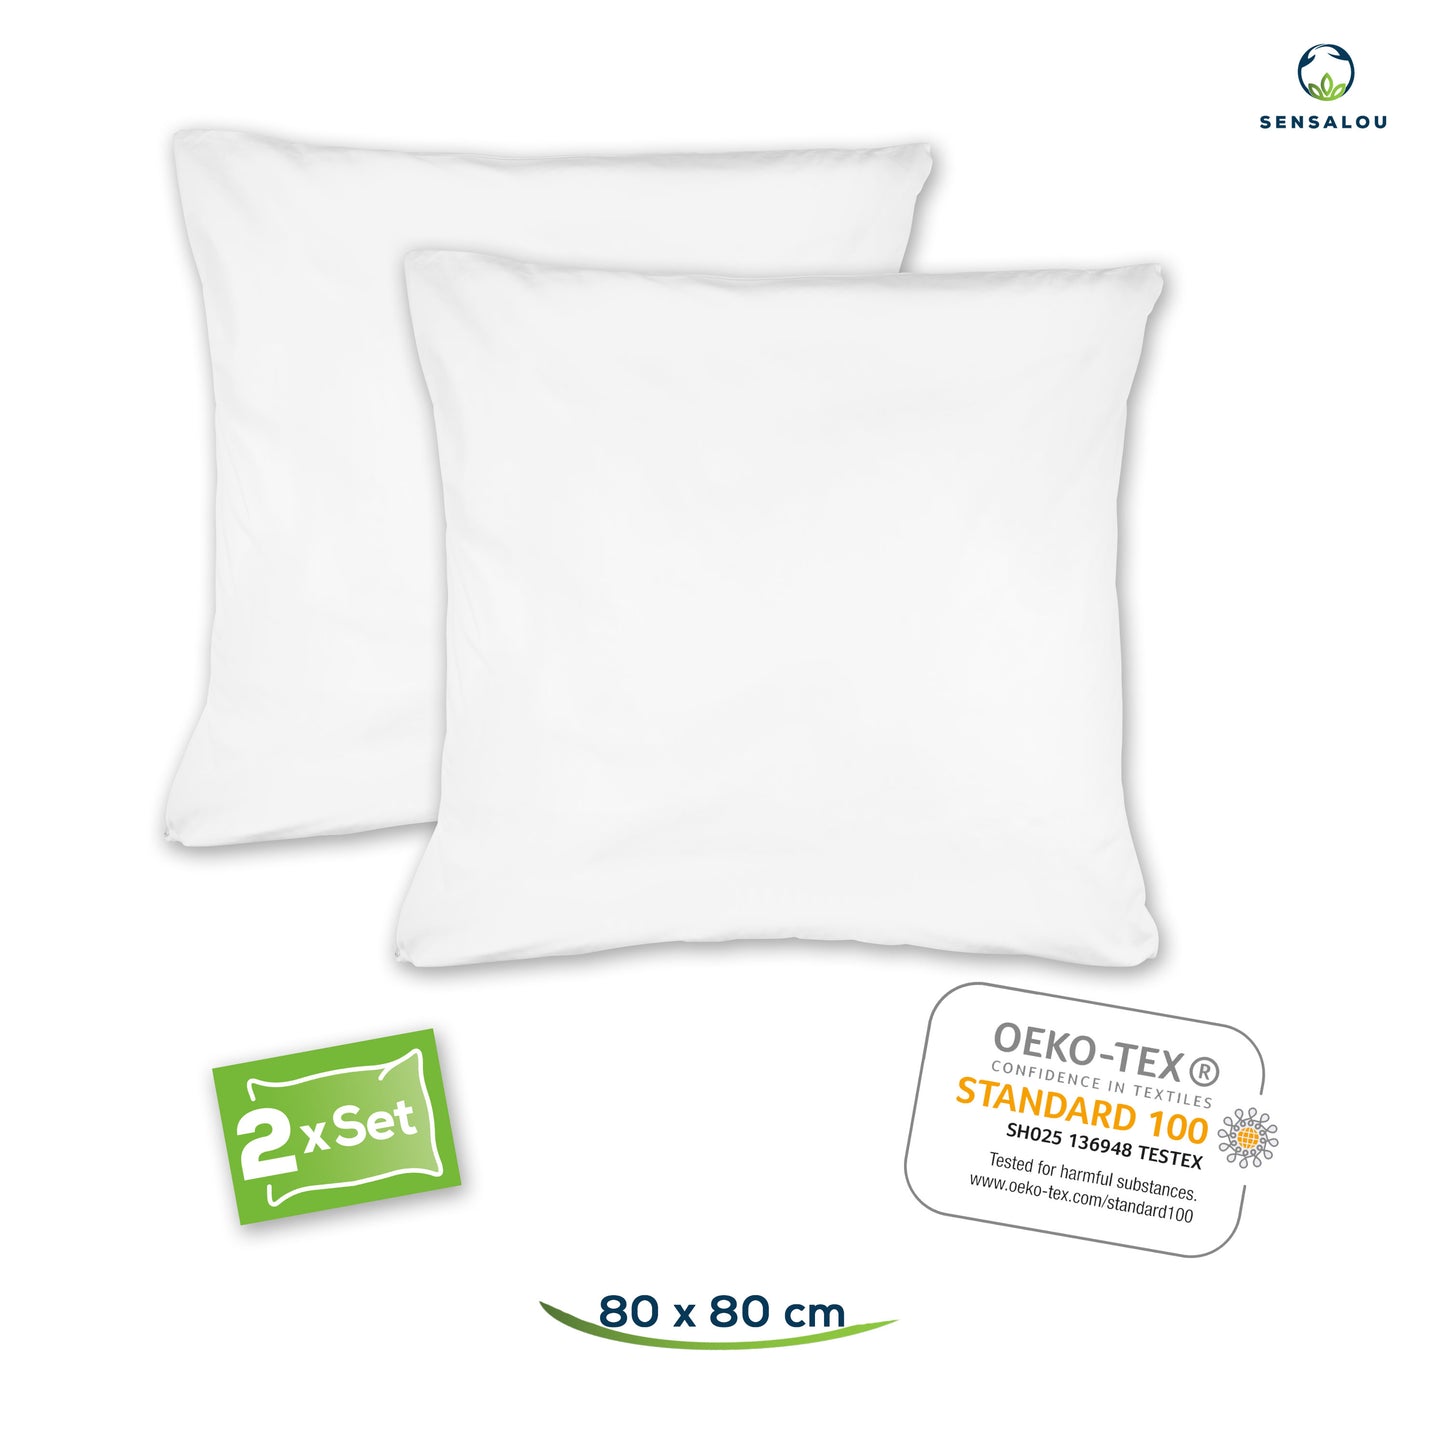 Sensalou cushion cover set of 2 waterproof